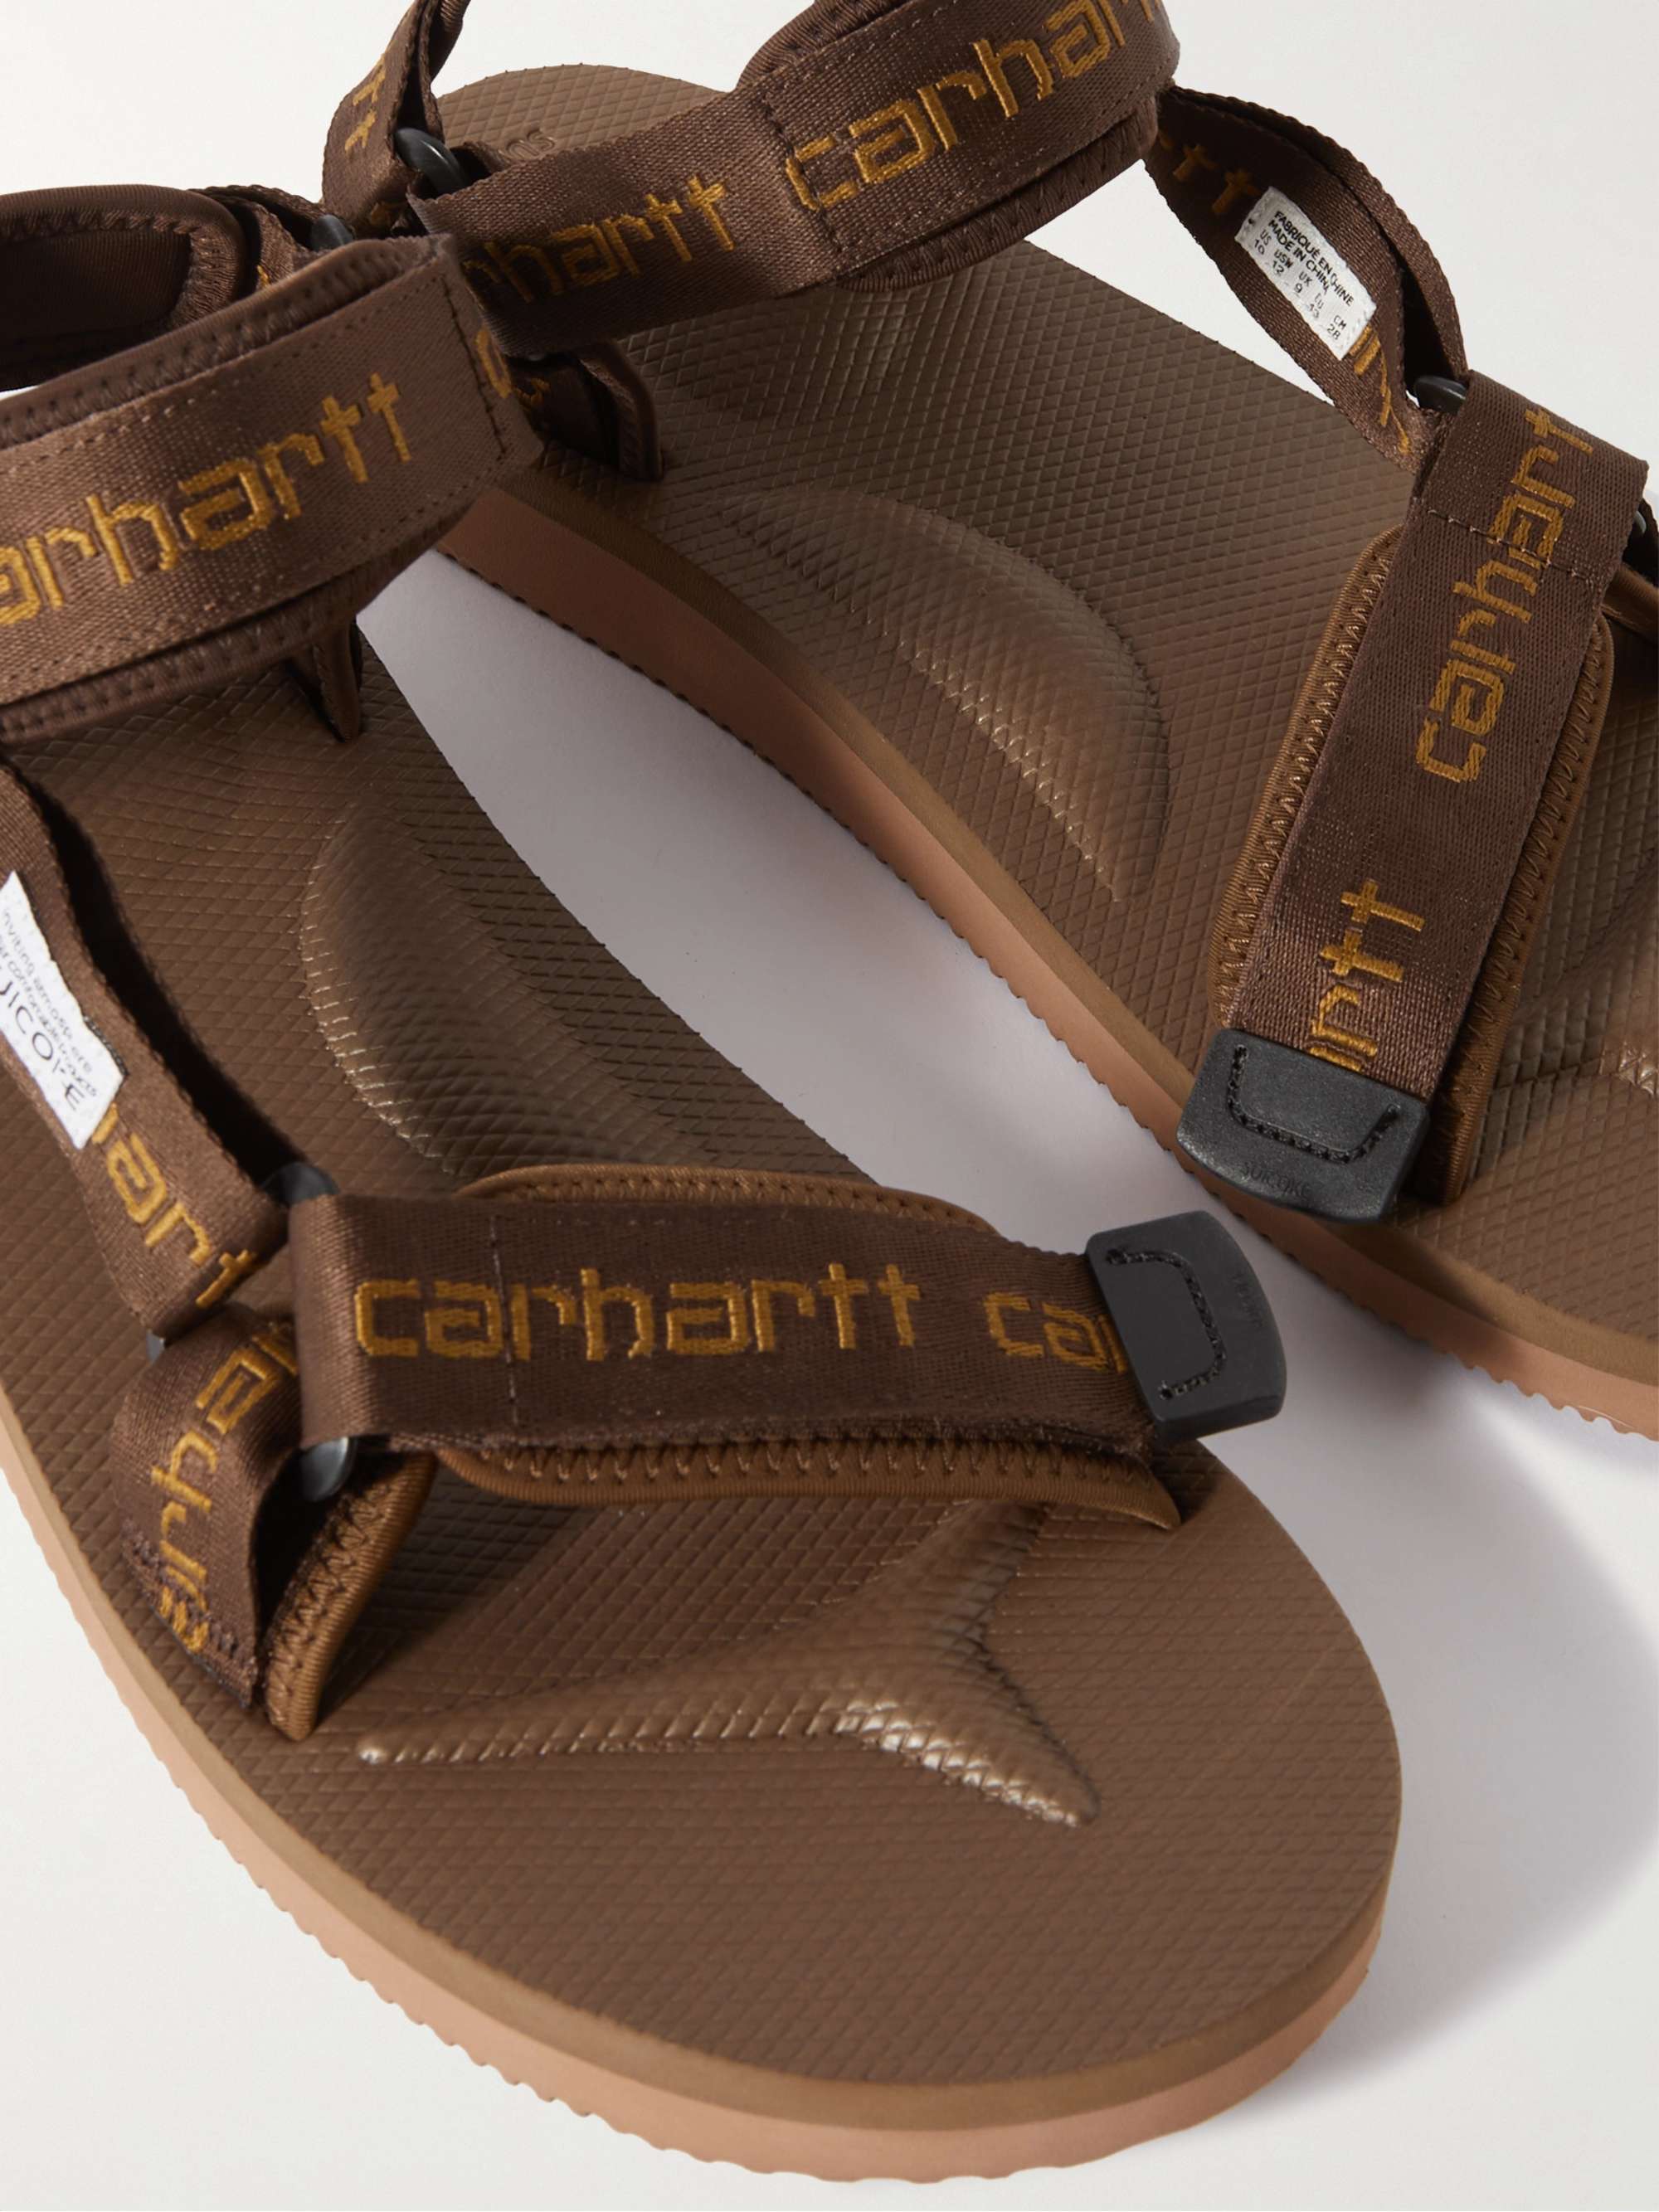 SUICOKE + Carhartt WIP Depa-V2CHT Logo-Jacquard Sandals